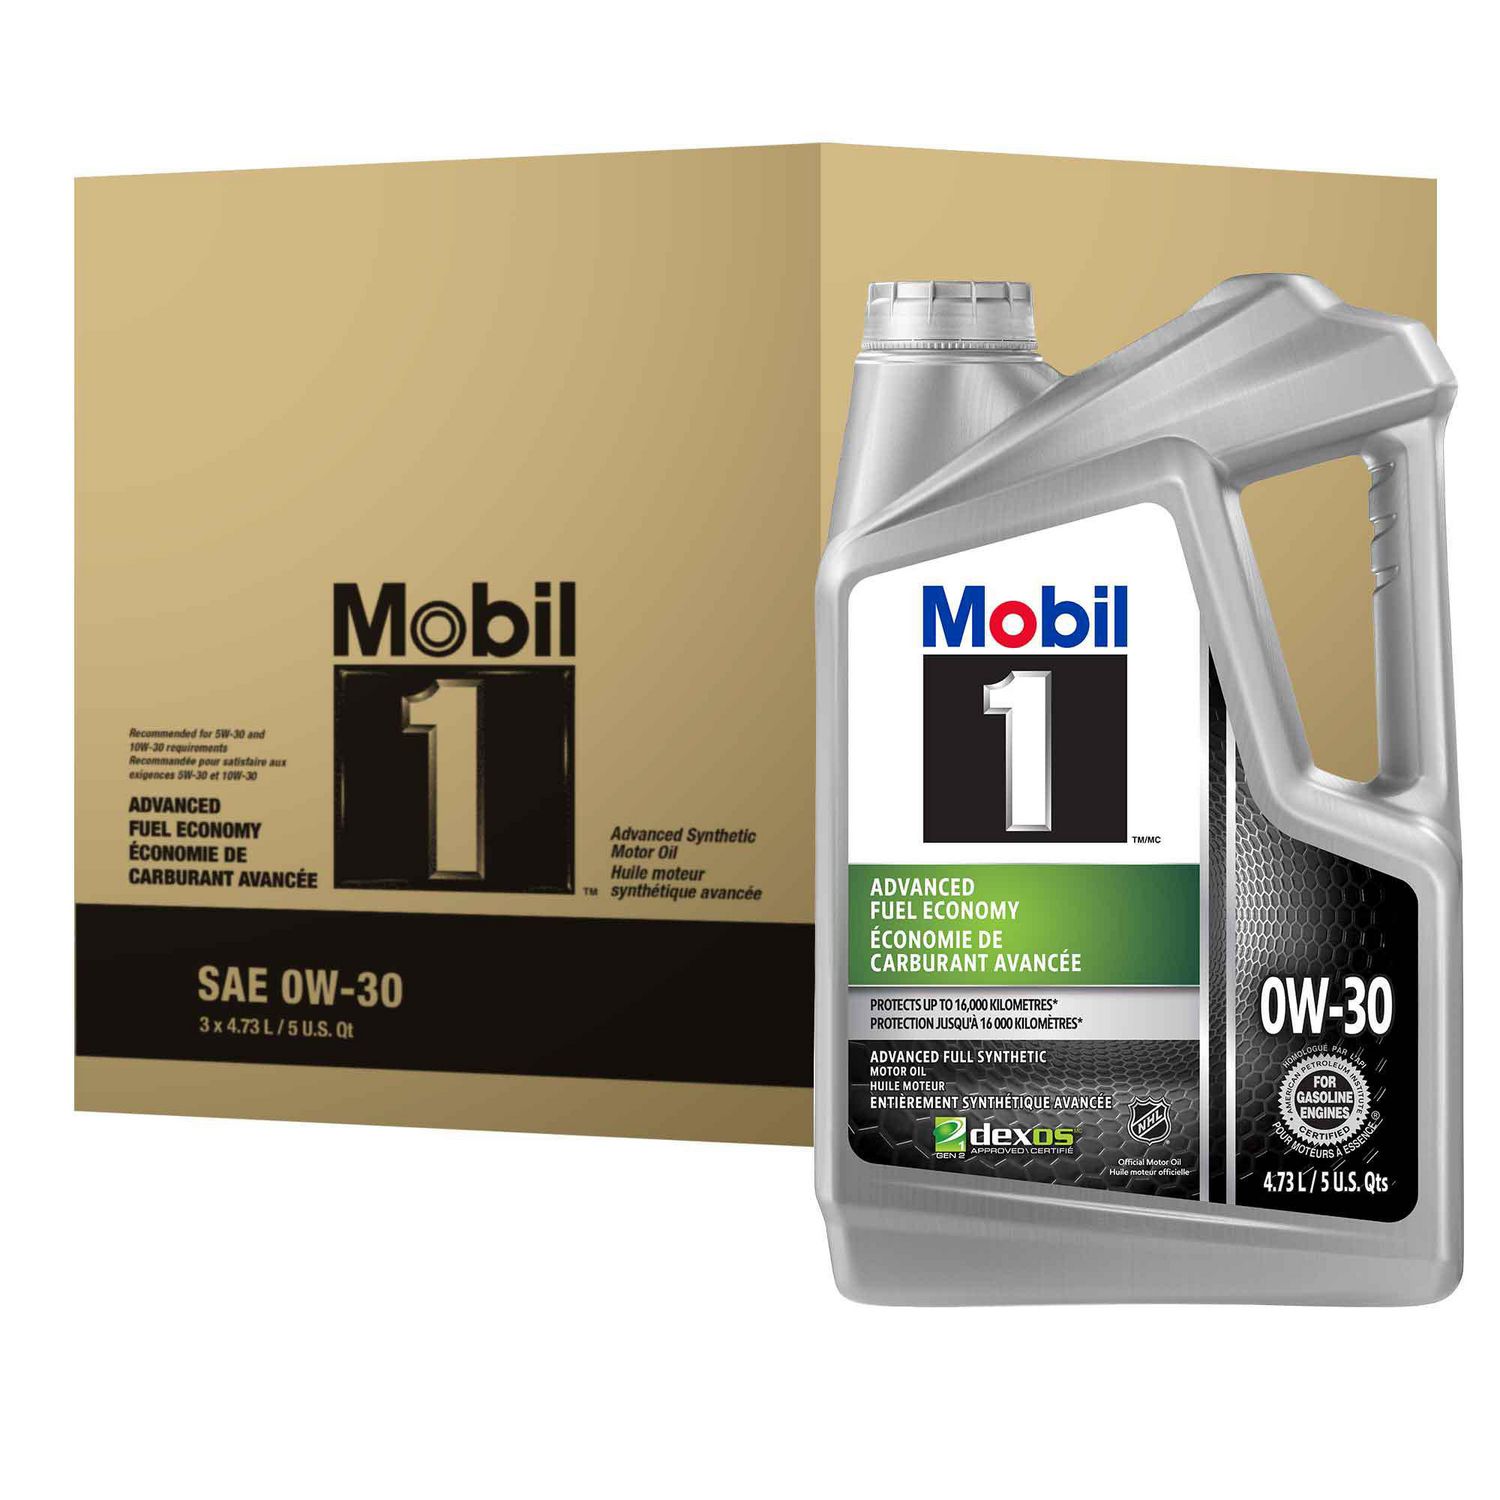 mobil-1-advanced-full-synthetic-motor-oil-5w-30-5-quart-walmart